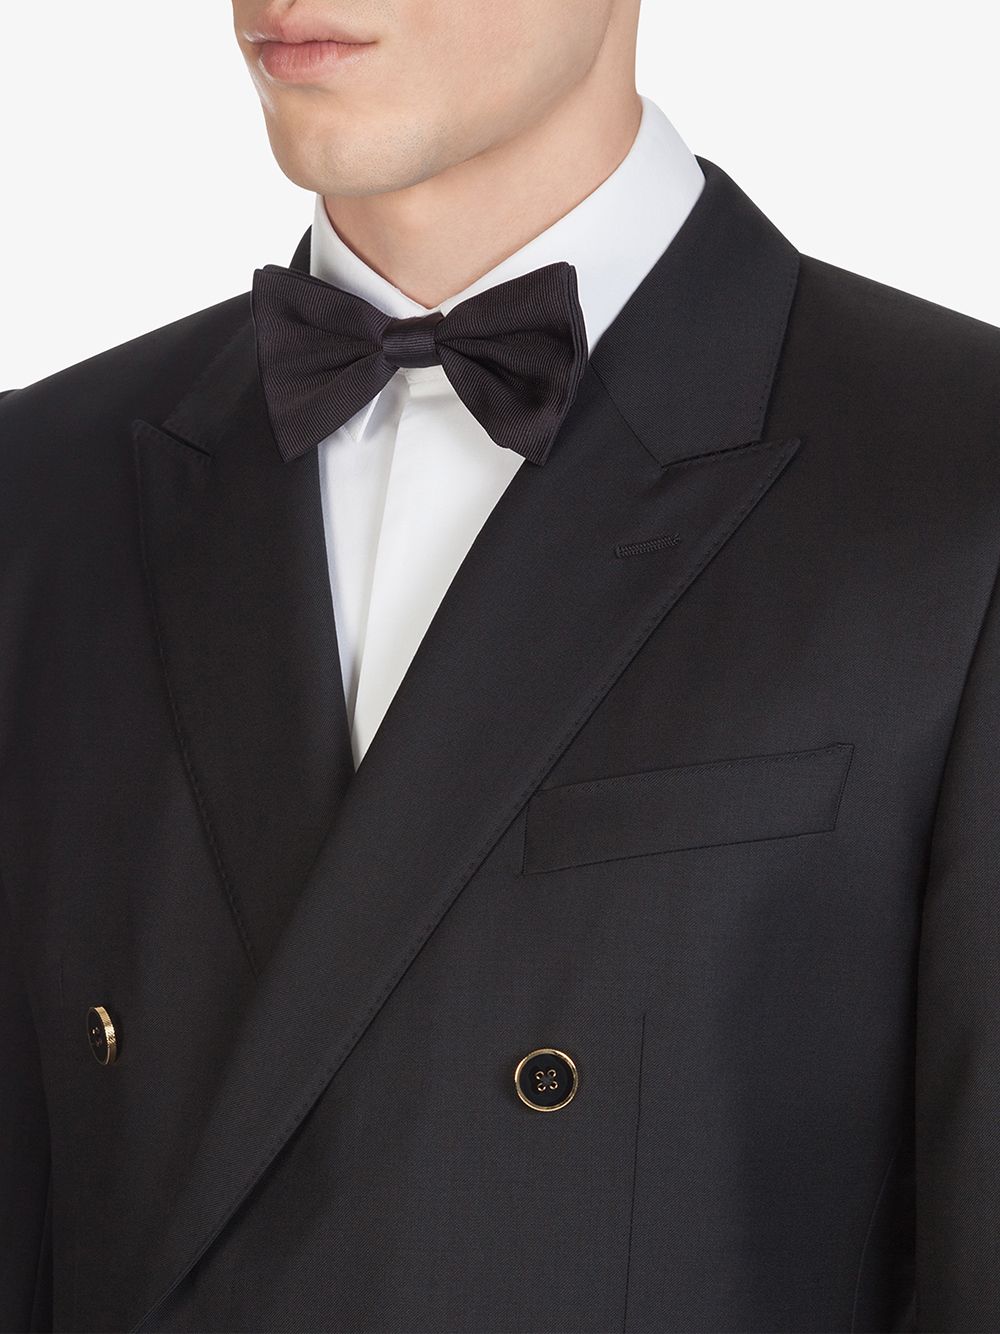 Dolce & Gabbana Martini Suit Jacket - Farfetch